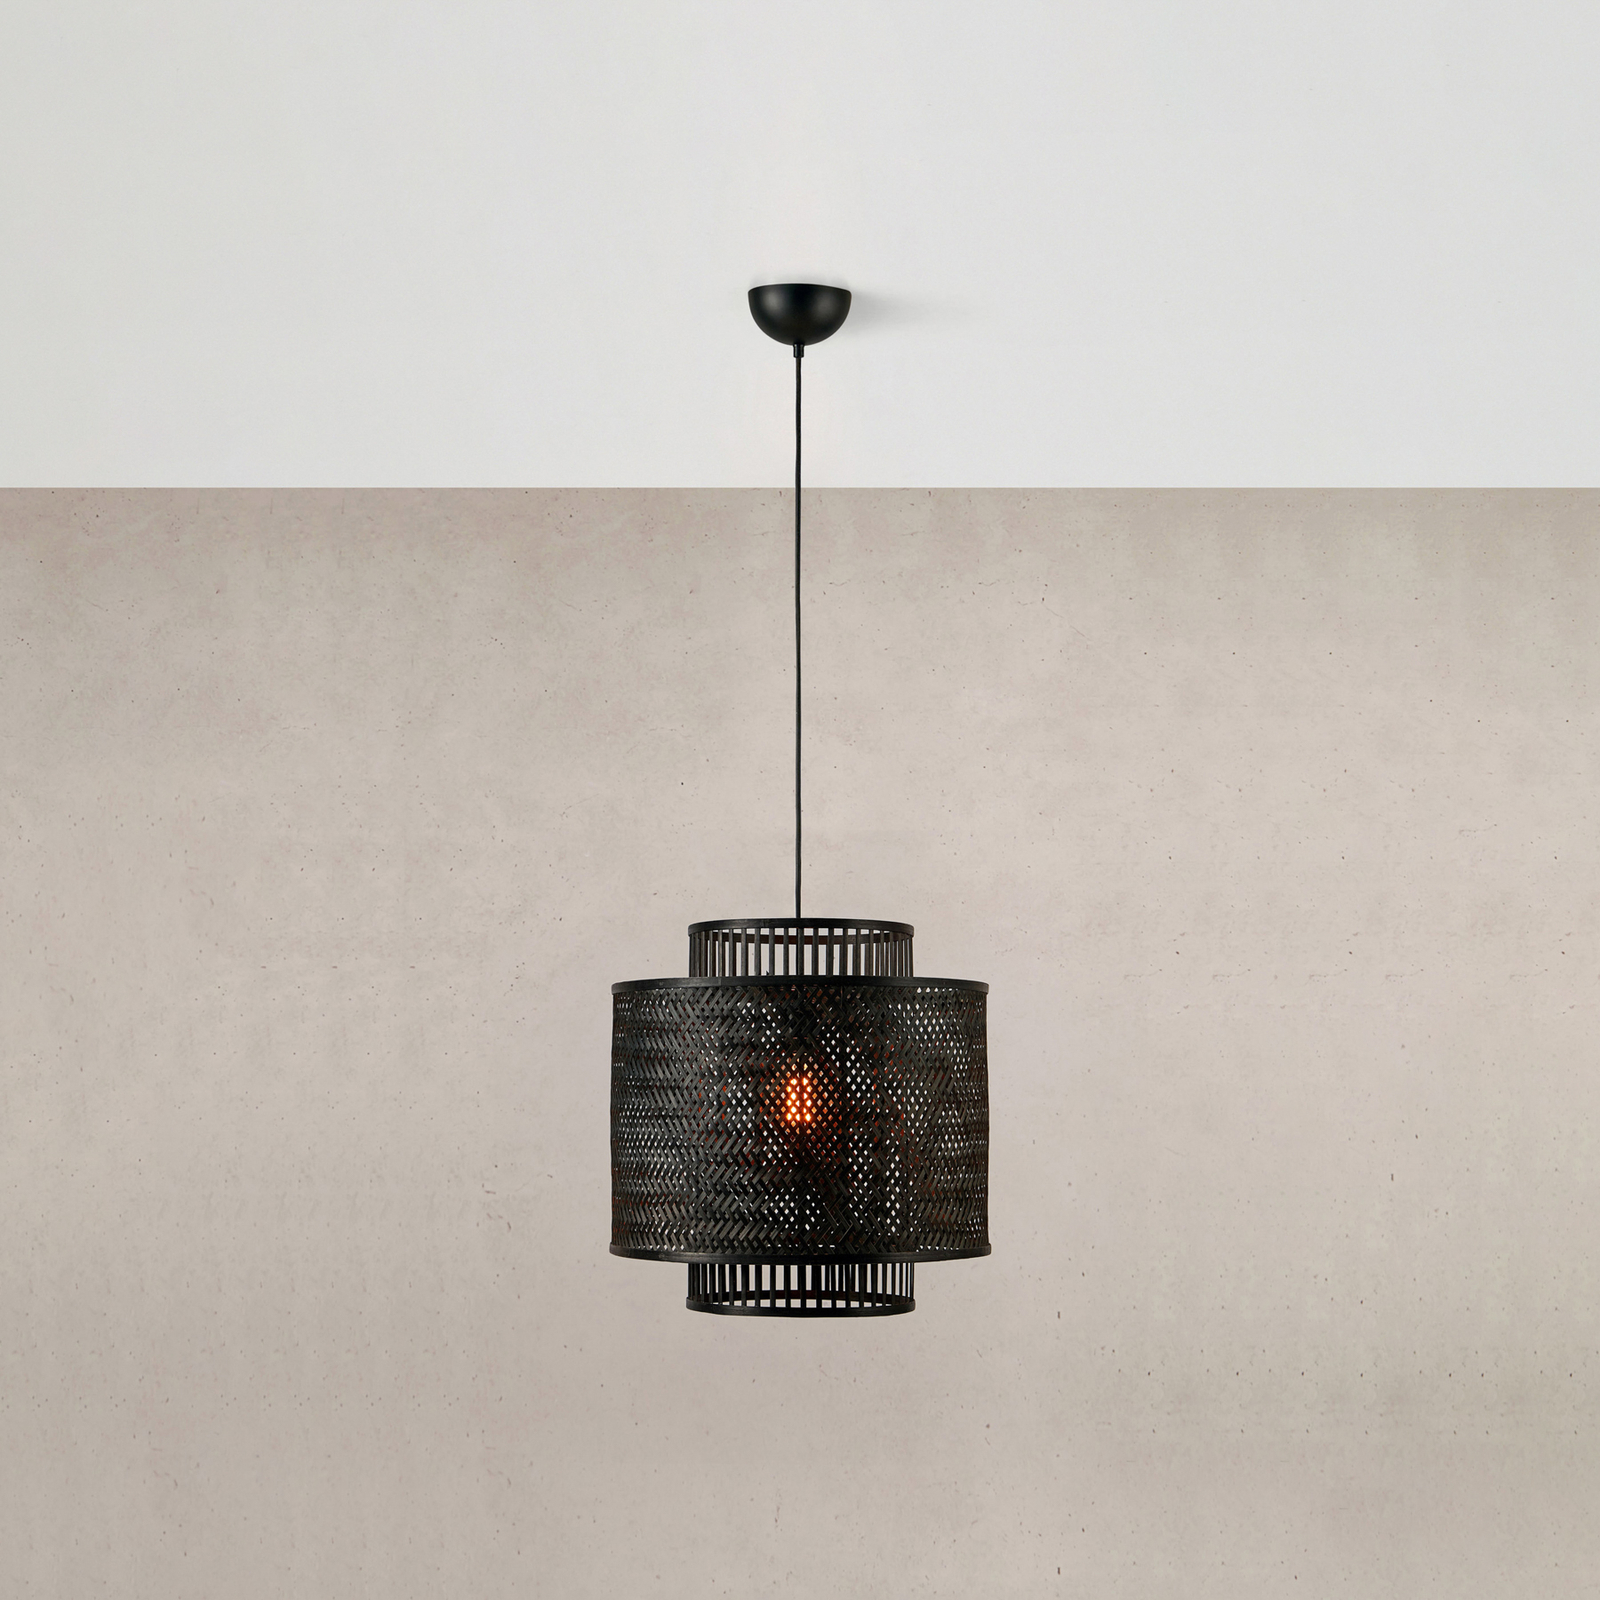 Strati pendant light made of bamboo, black